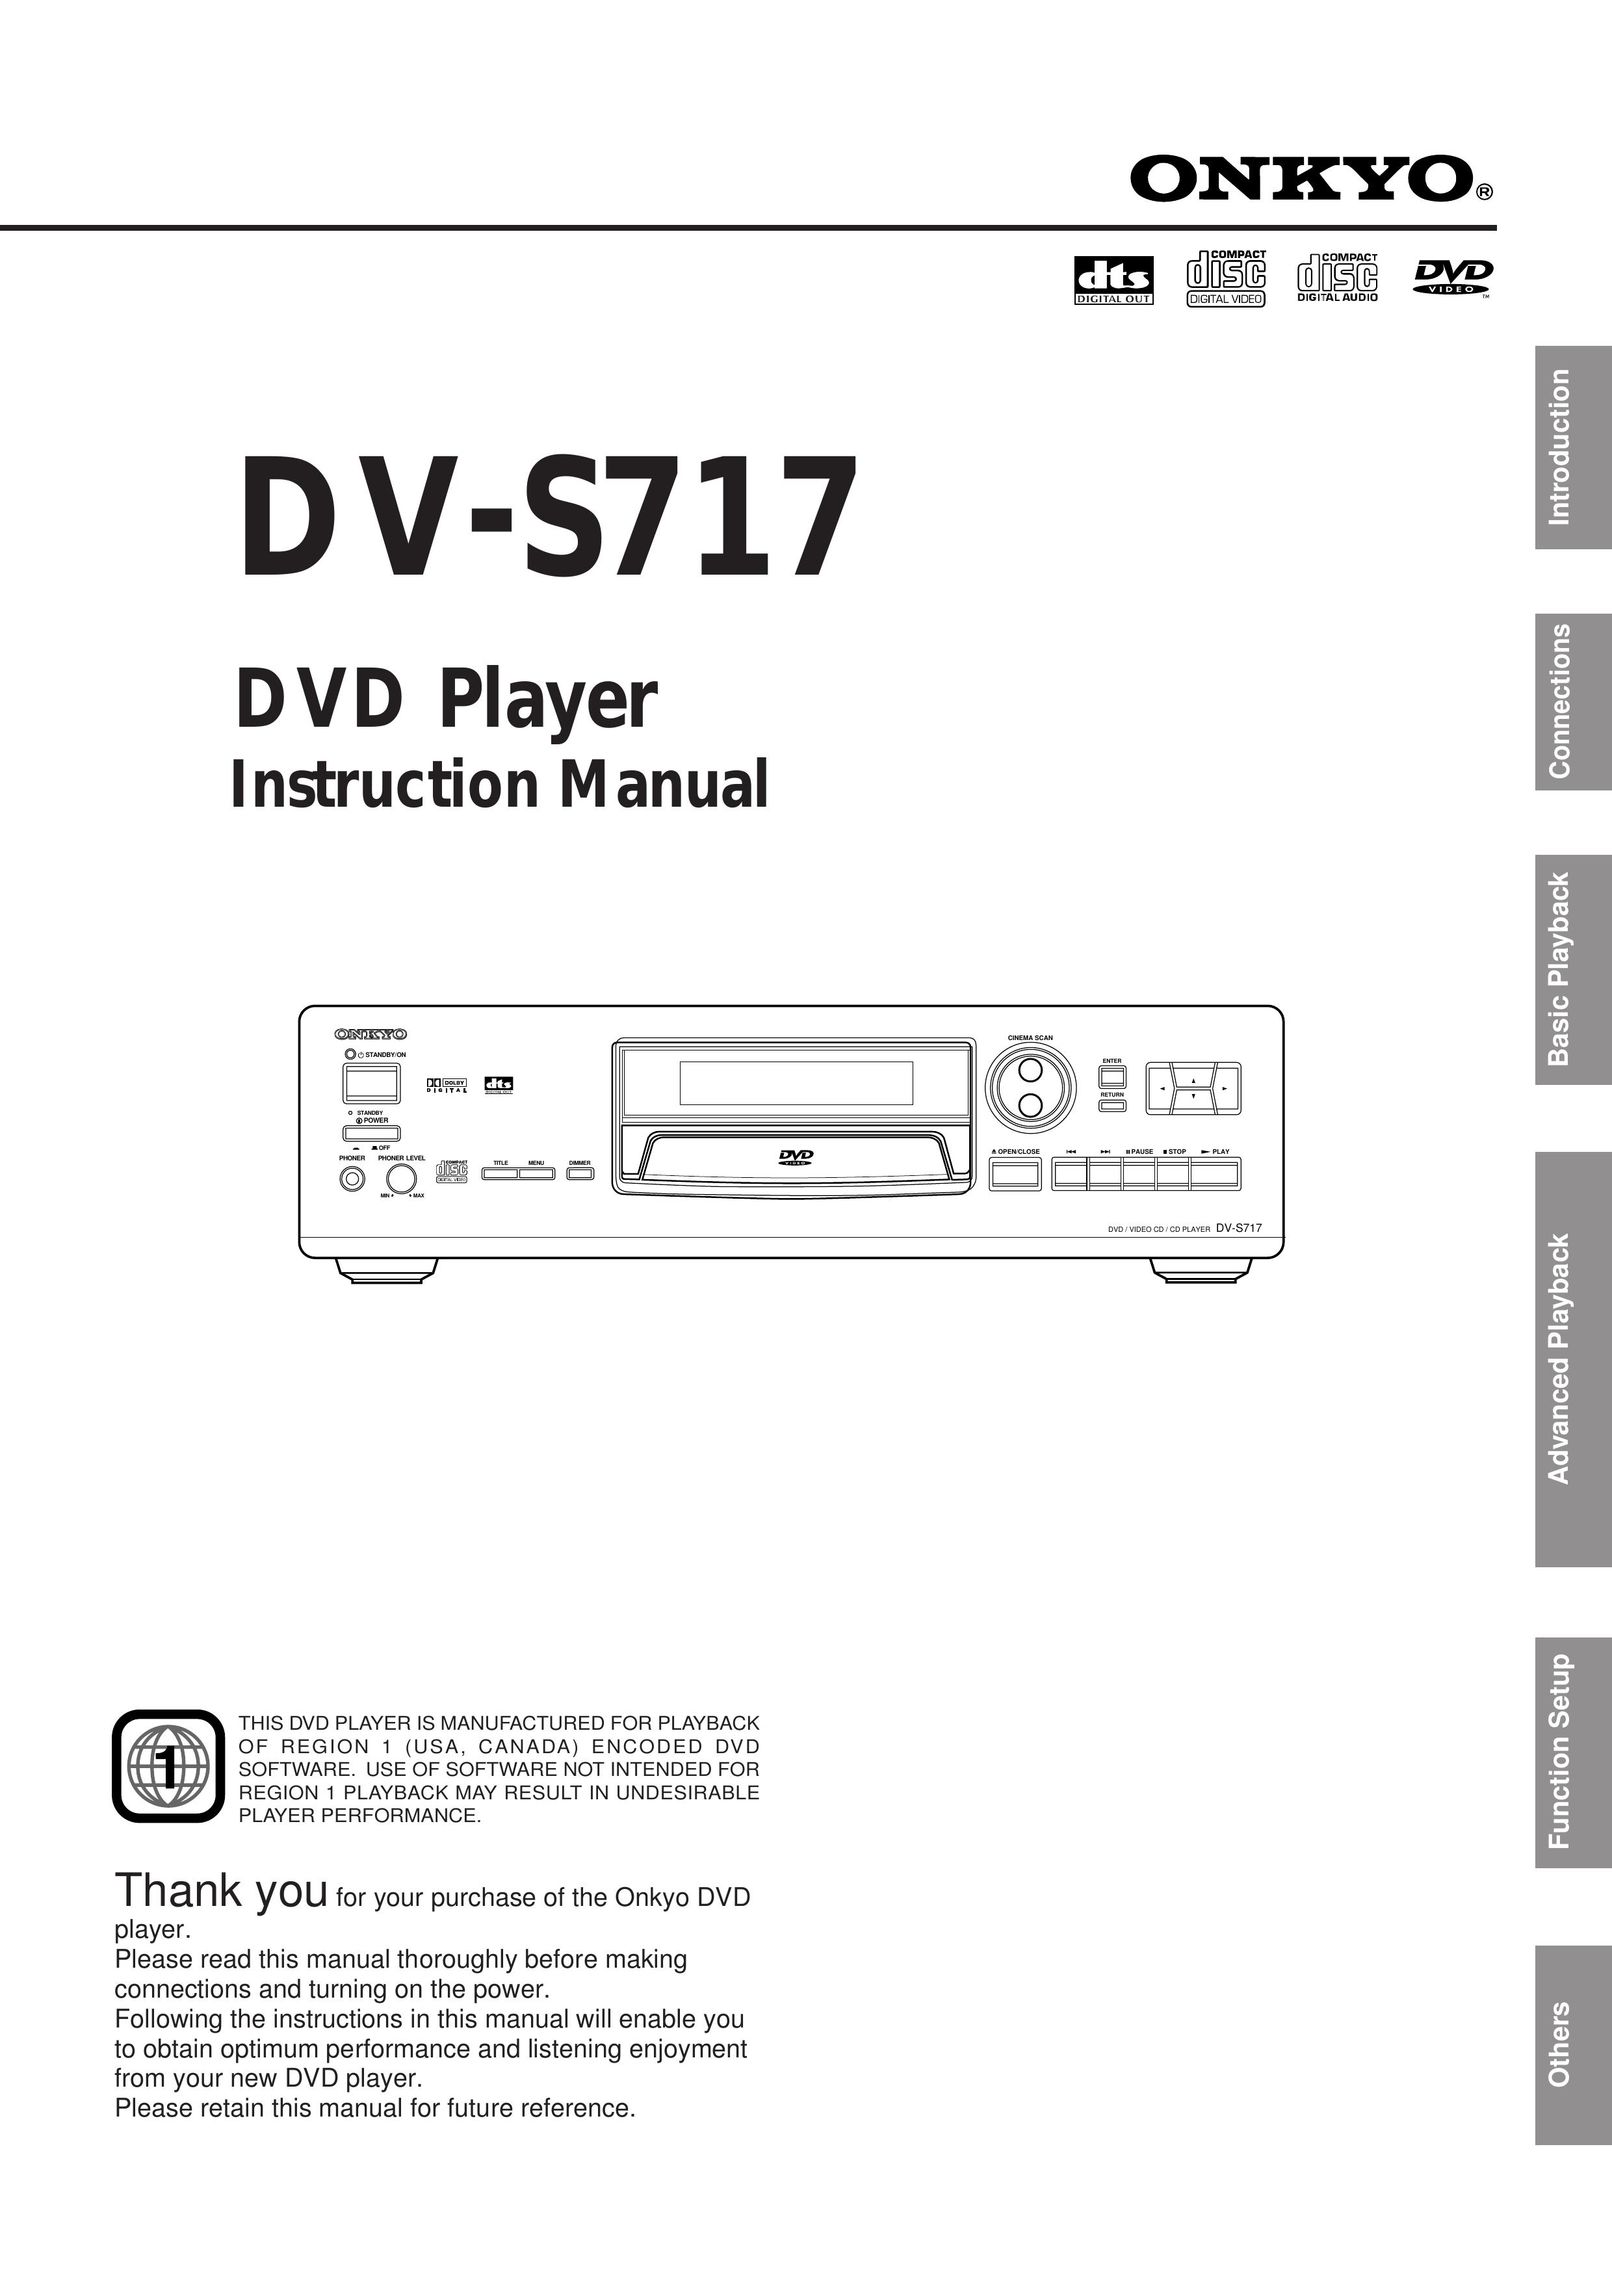 Onkyo DV-S717 DVD Player User Manual